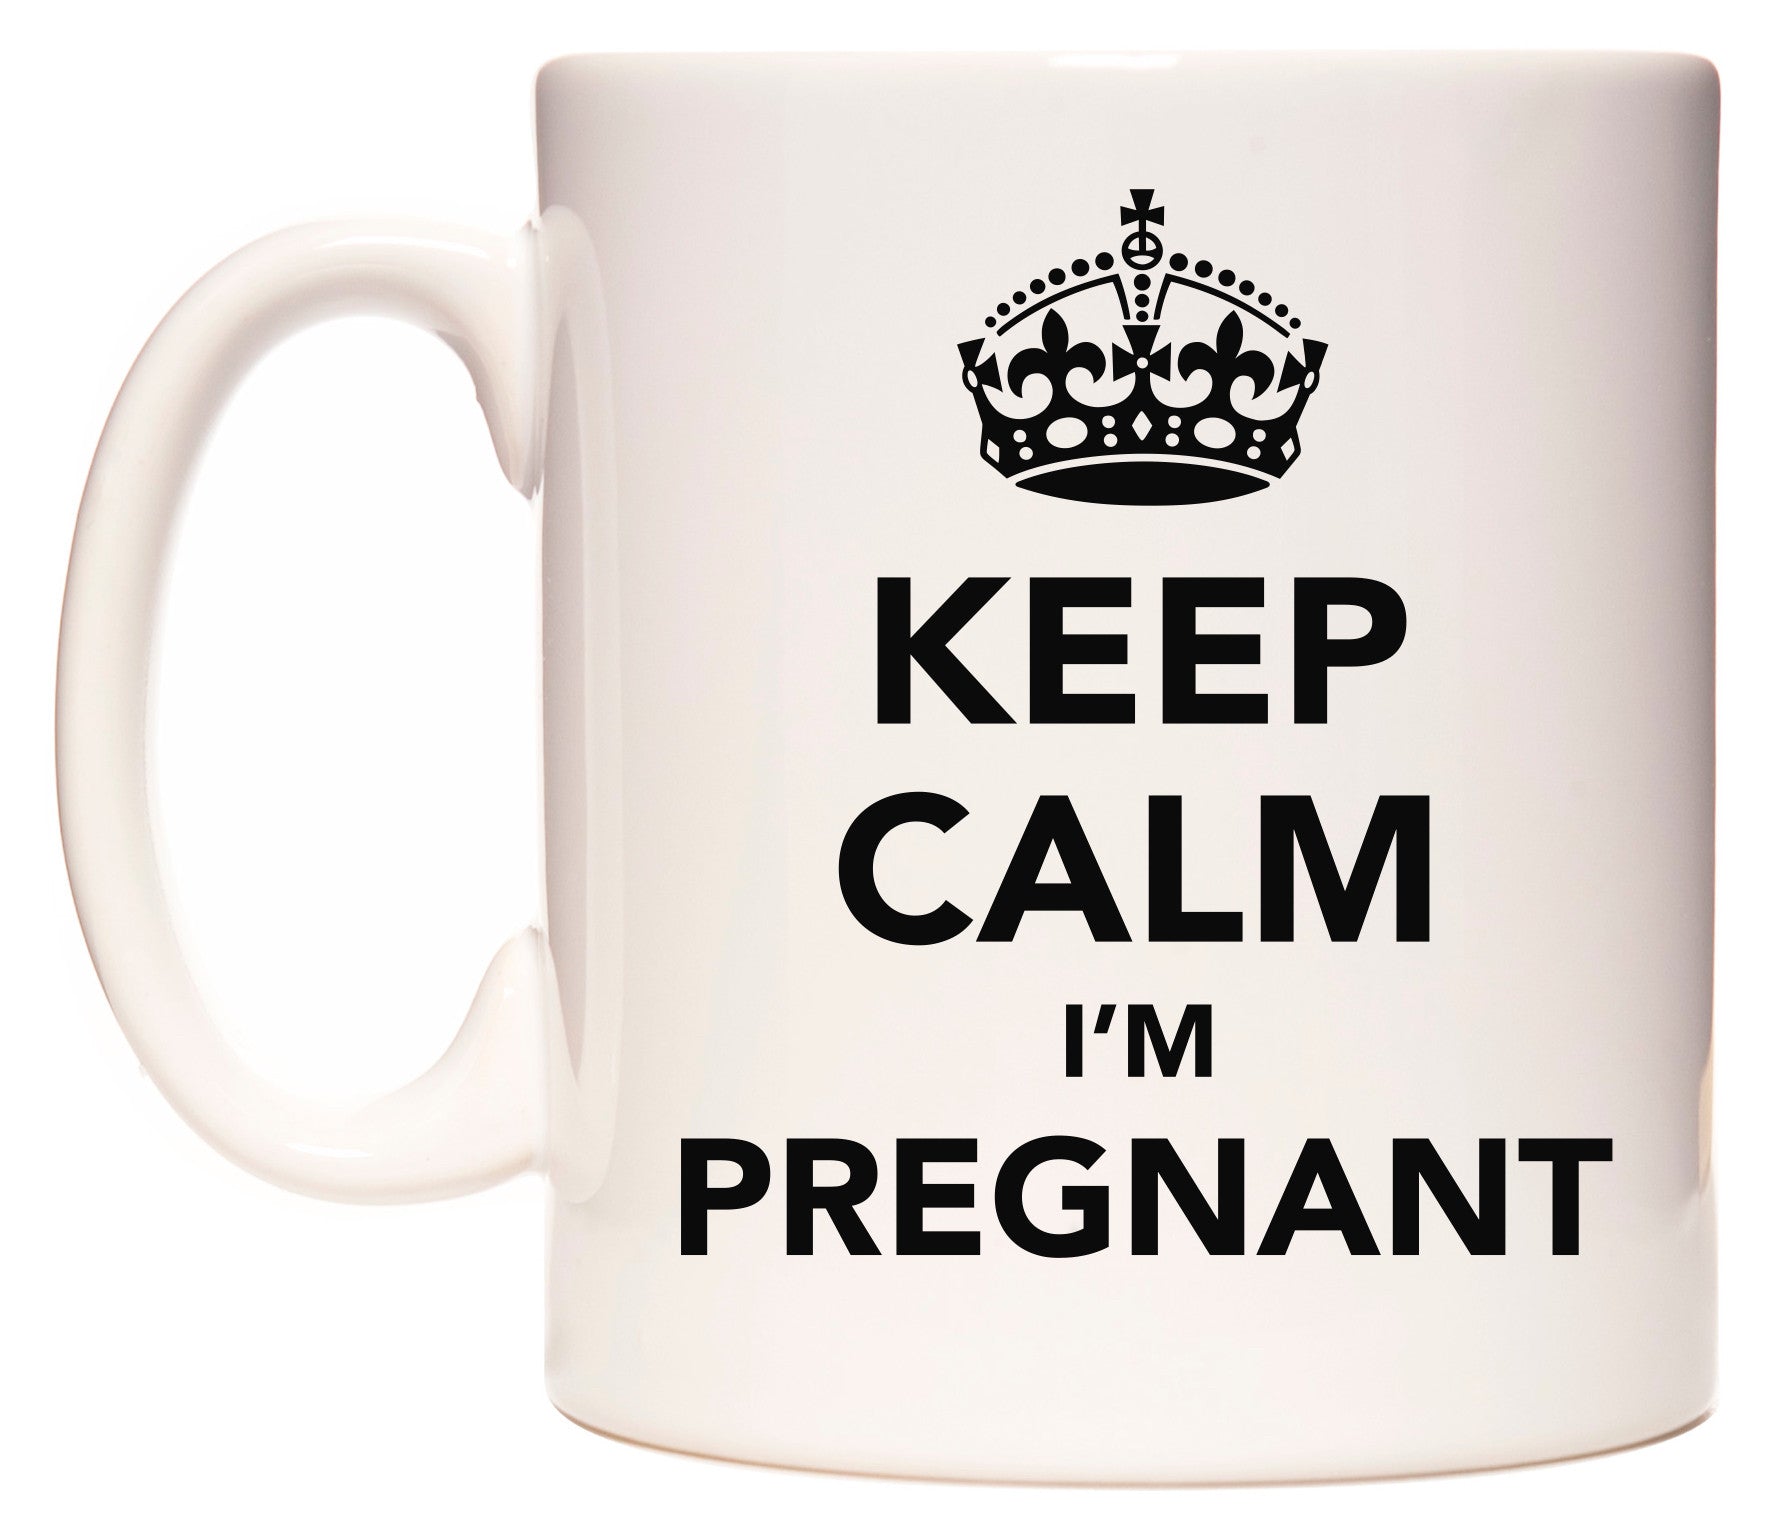 This mug features KEEP CALM I'M PREGNANT